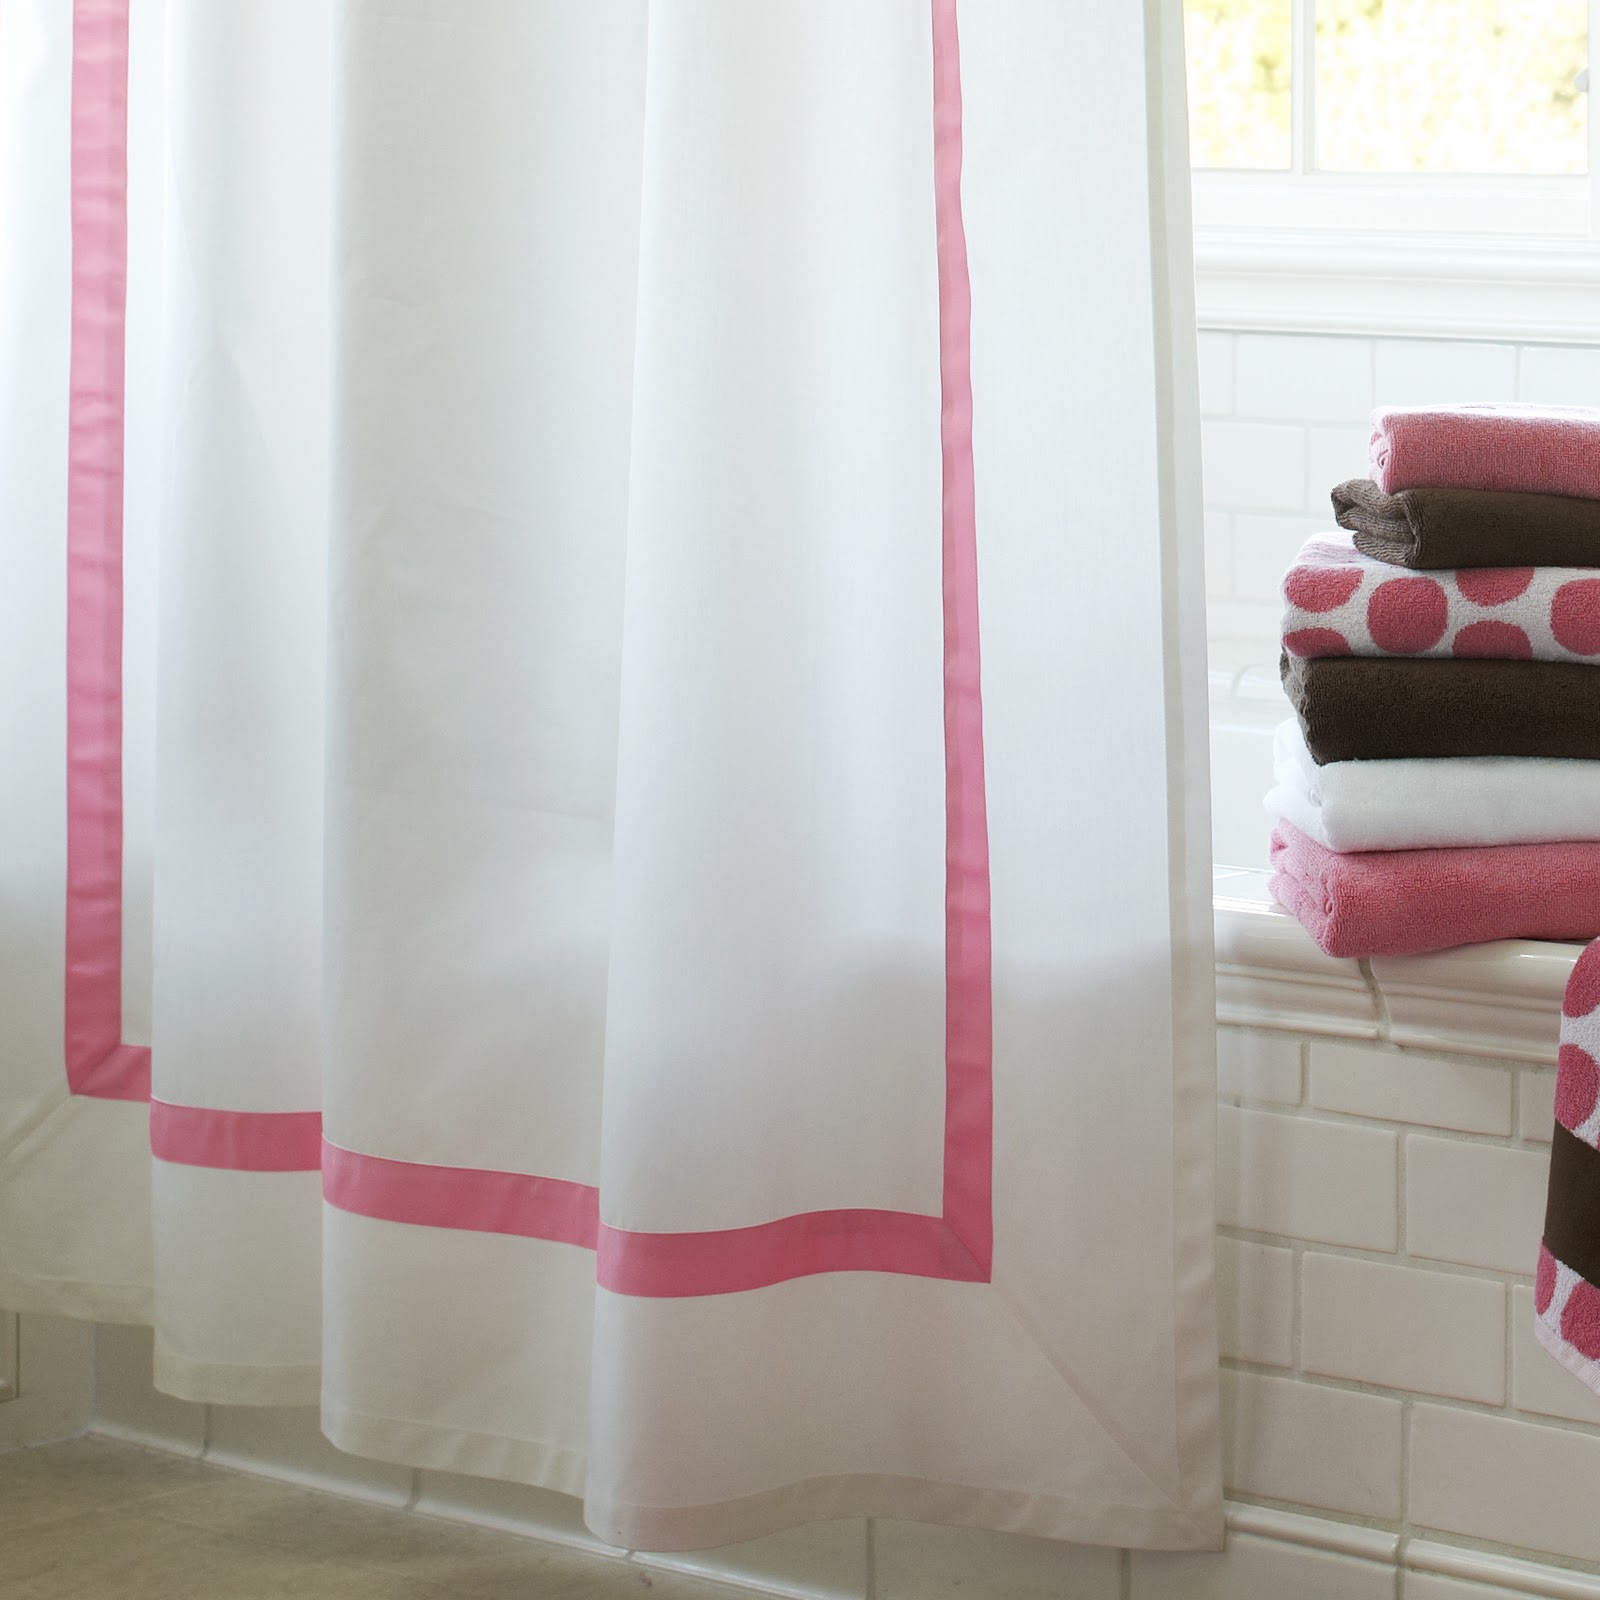 http://4.bp.blogspot.com/-cQt029xK_0I/TZqoTlFssTI/AAAAAAAAAV0/uvdLi5ILrzM/s1600/Suite+Ribbon+Shower+Curtain+in+Bright+Pink+PBteen.jpg